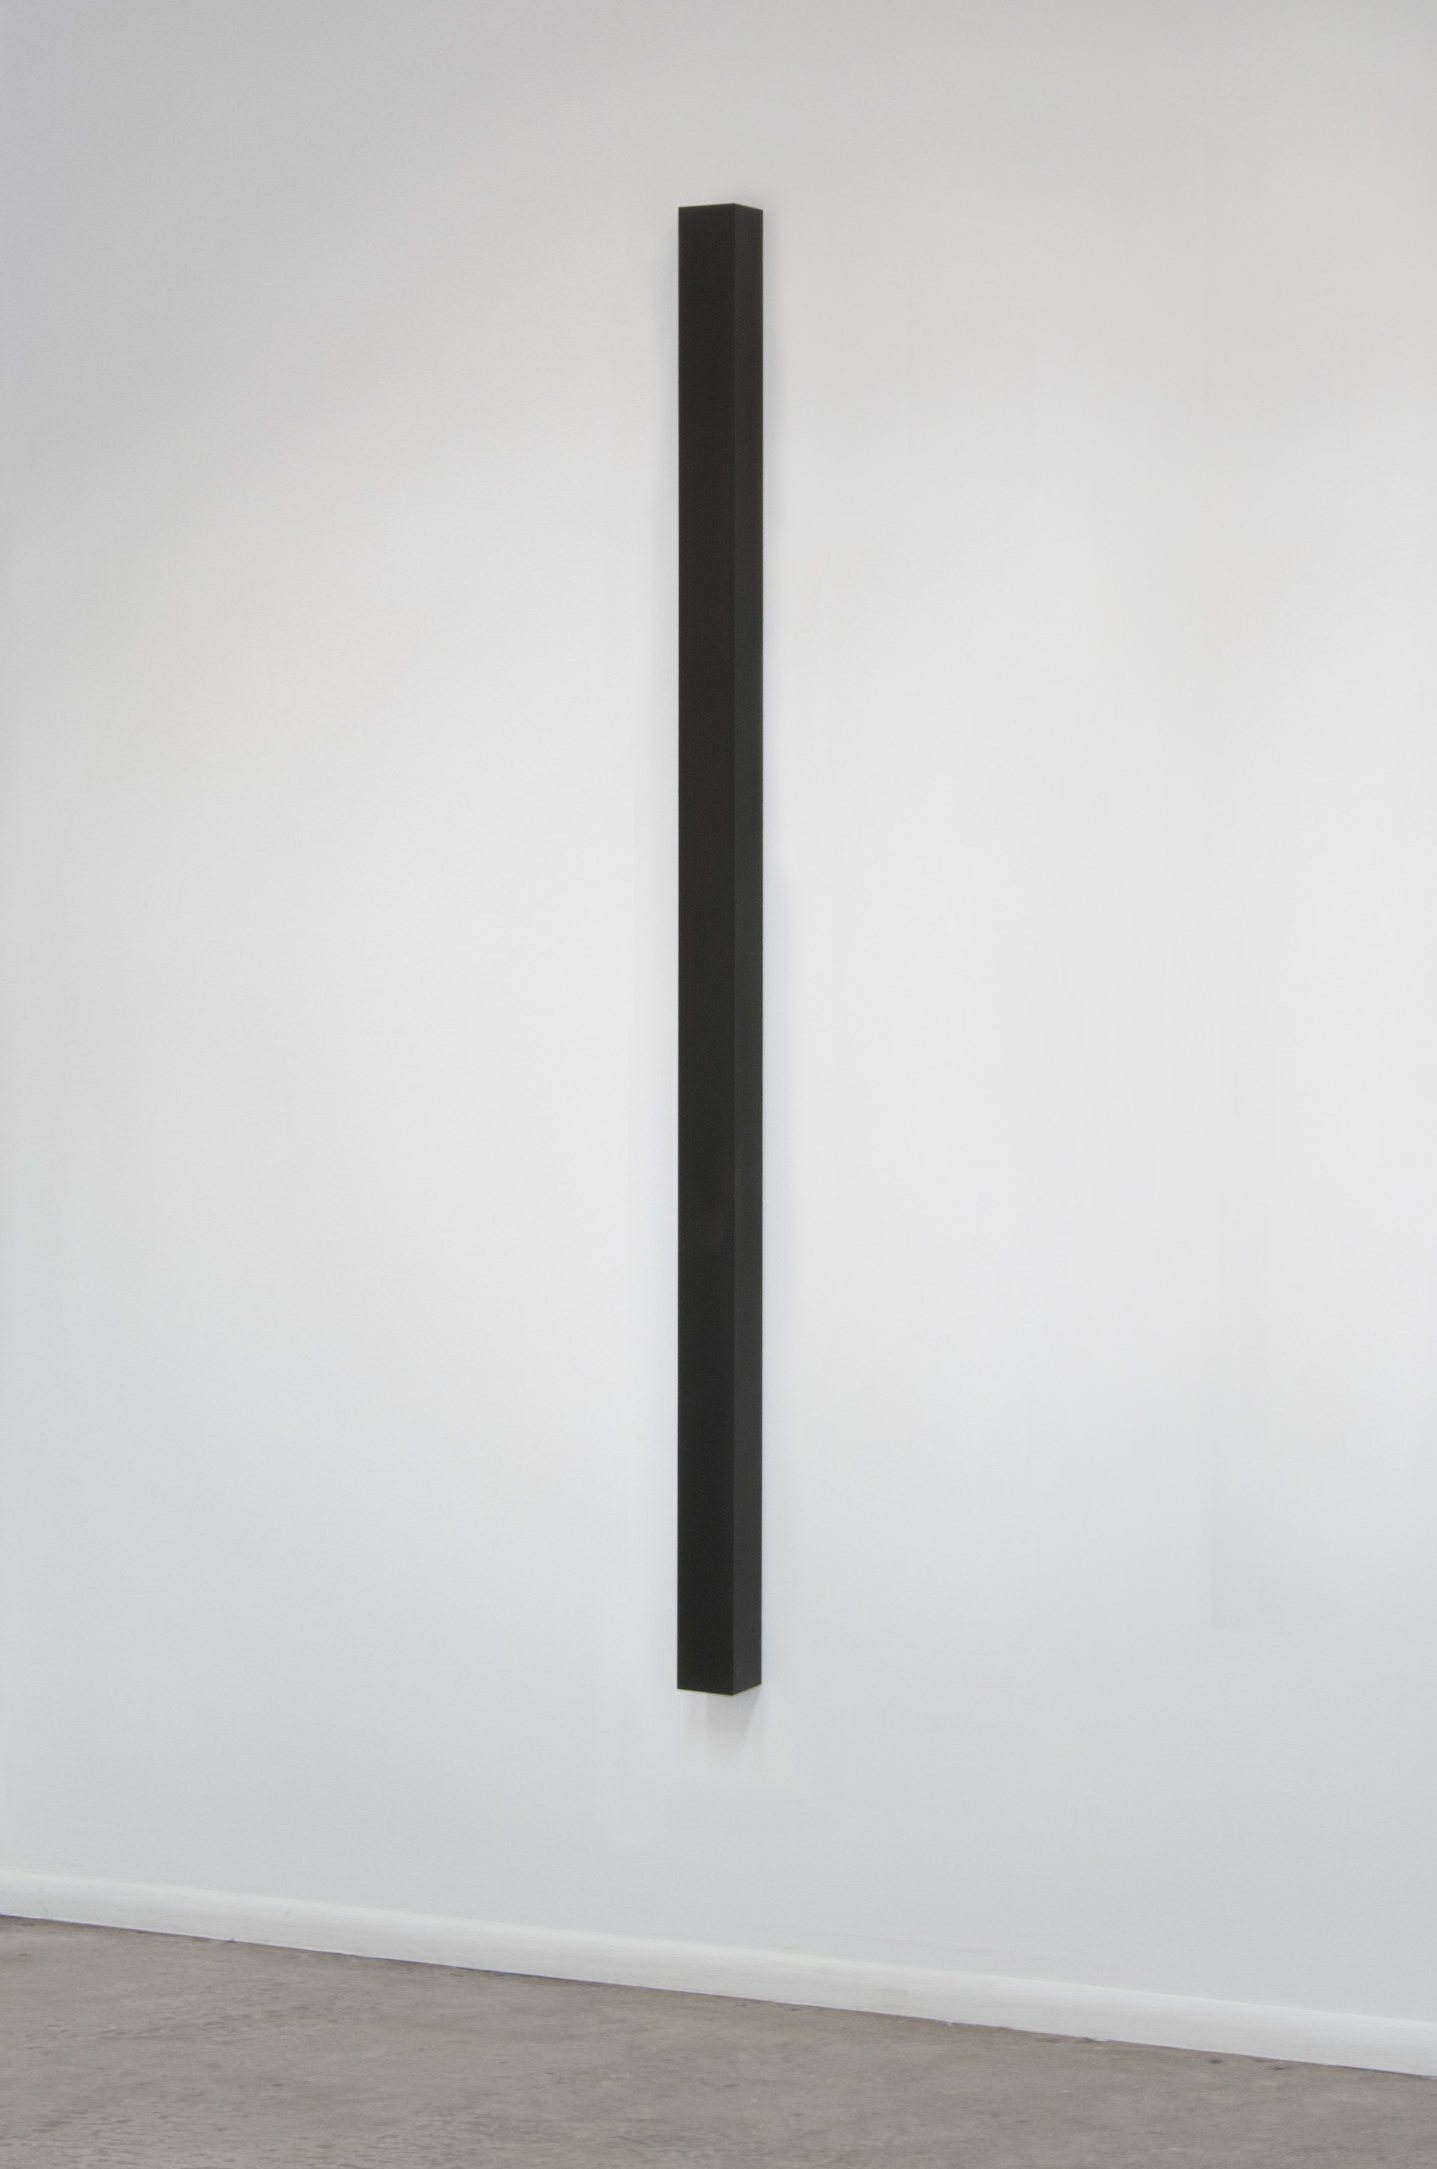   Untitled (Column), 2015  Solid graphite,&nbsp;75” x 3” x 3” 